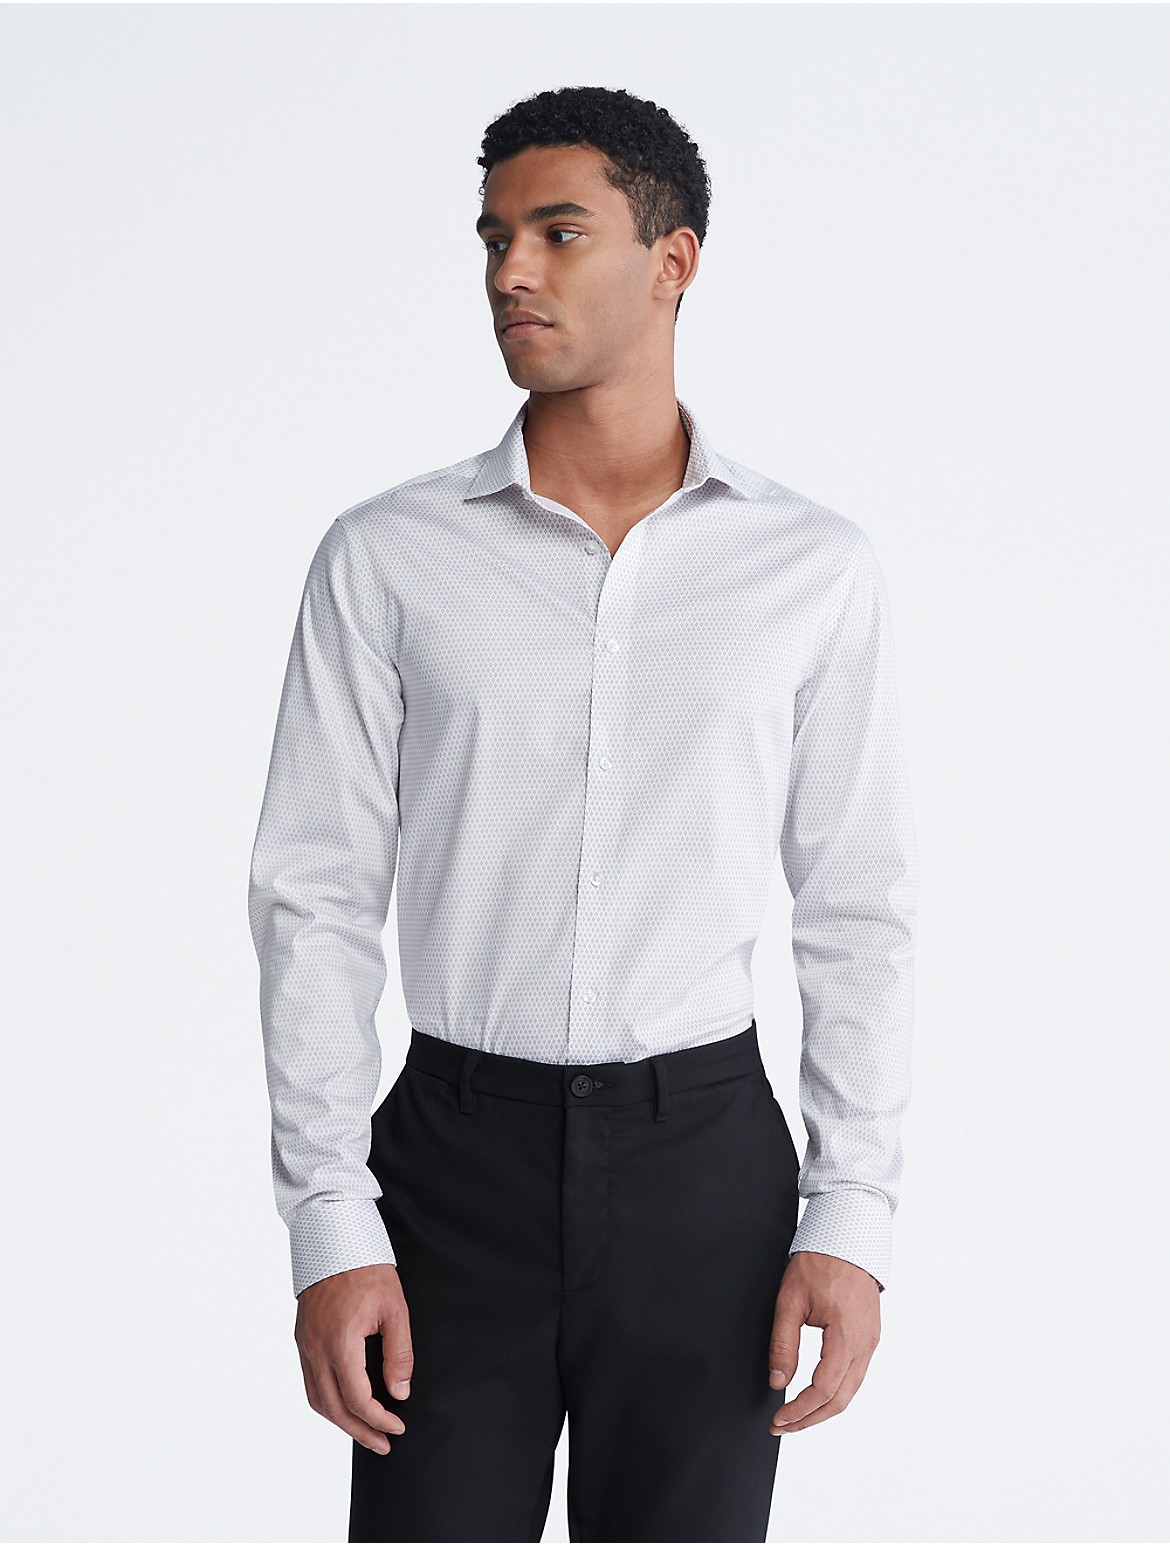 Calvin Klein Men's Steel Slim Fit Grey Diamond Dress Shirt - Grey - 14.5/32-33